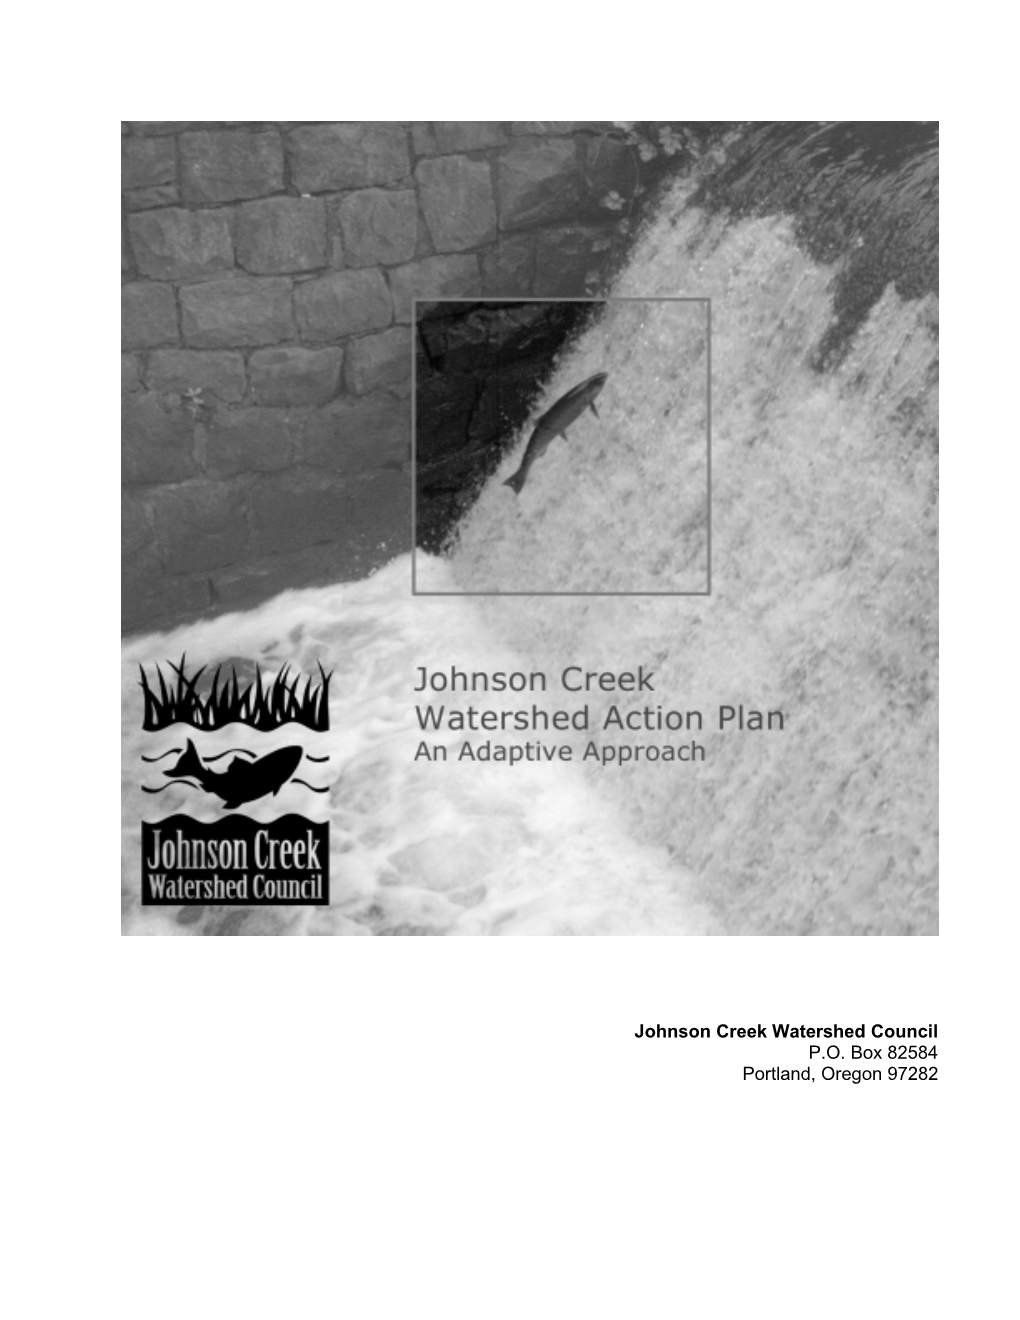 Johnson Creek Watershed Council P.O. Box 82584 Portland, Oregon 97282